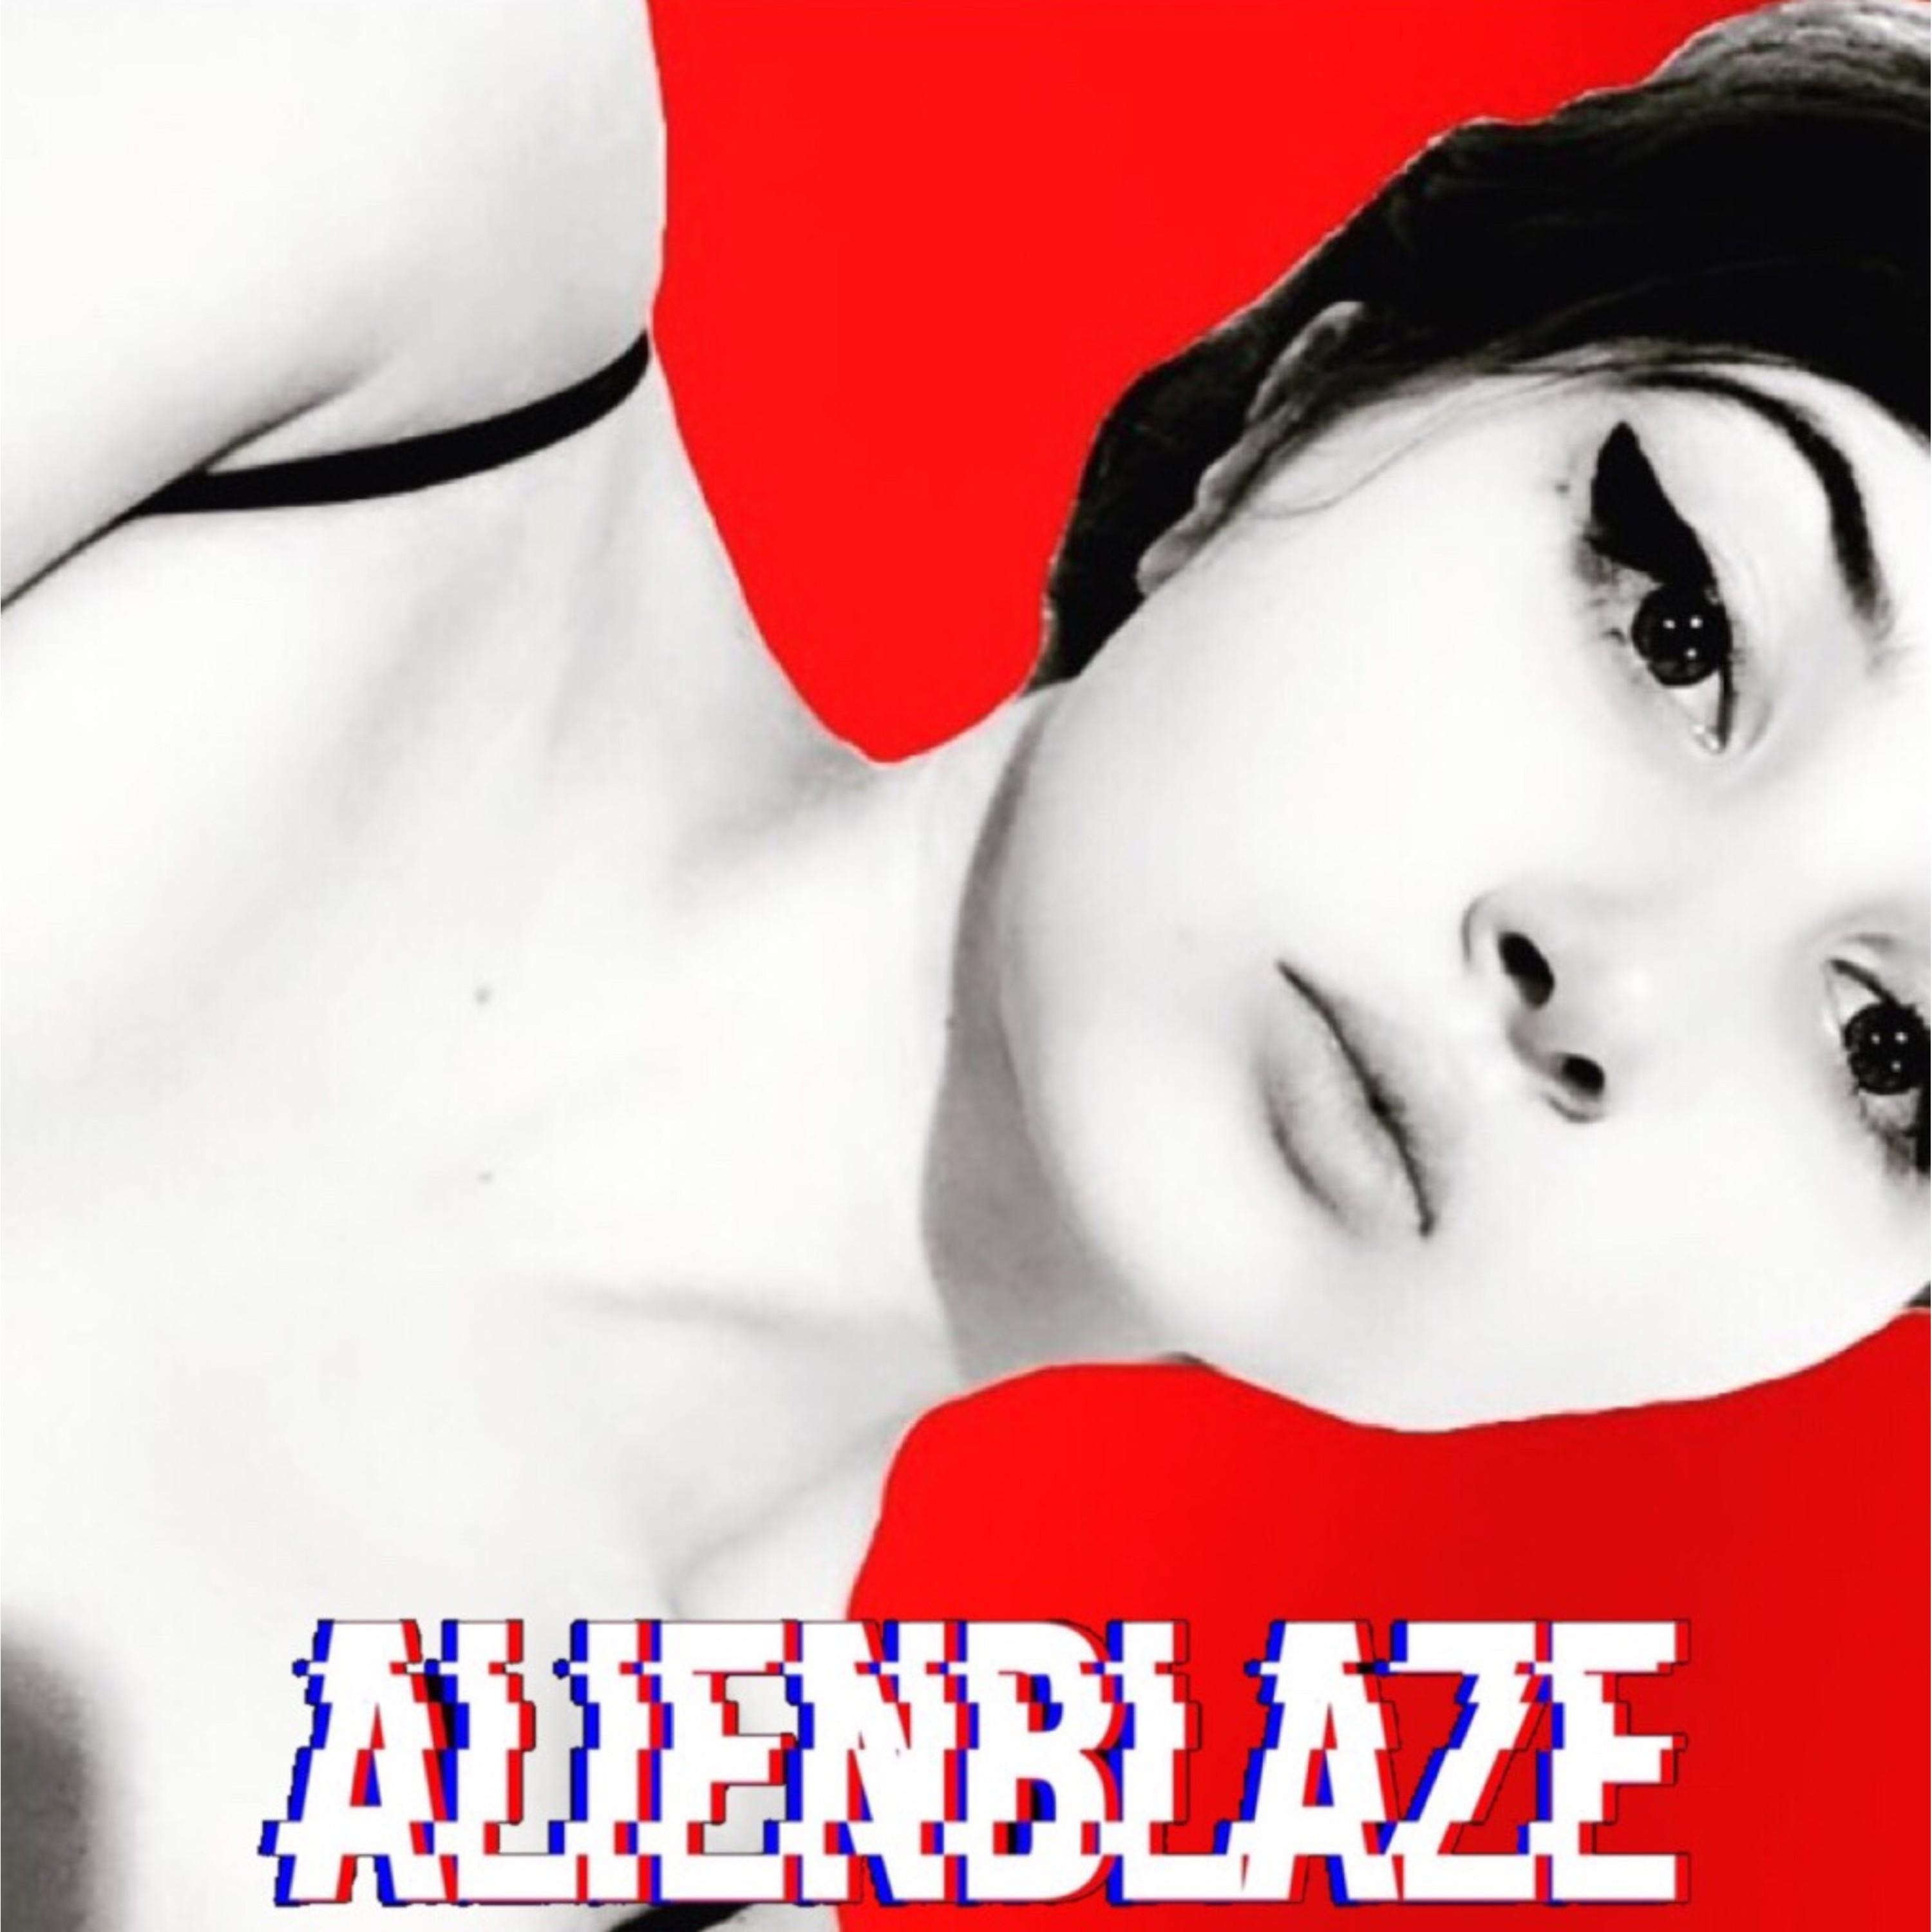 AlienBlaze - Sacrifice